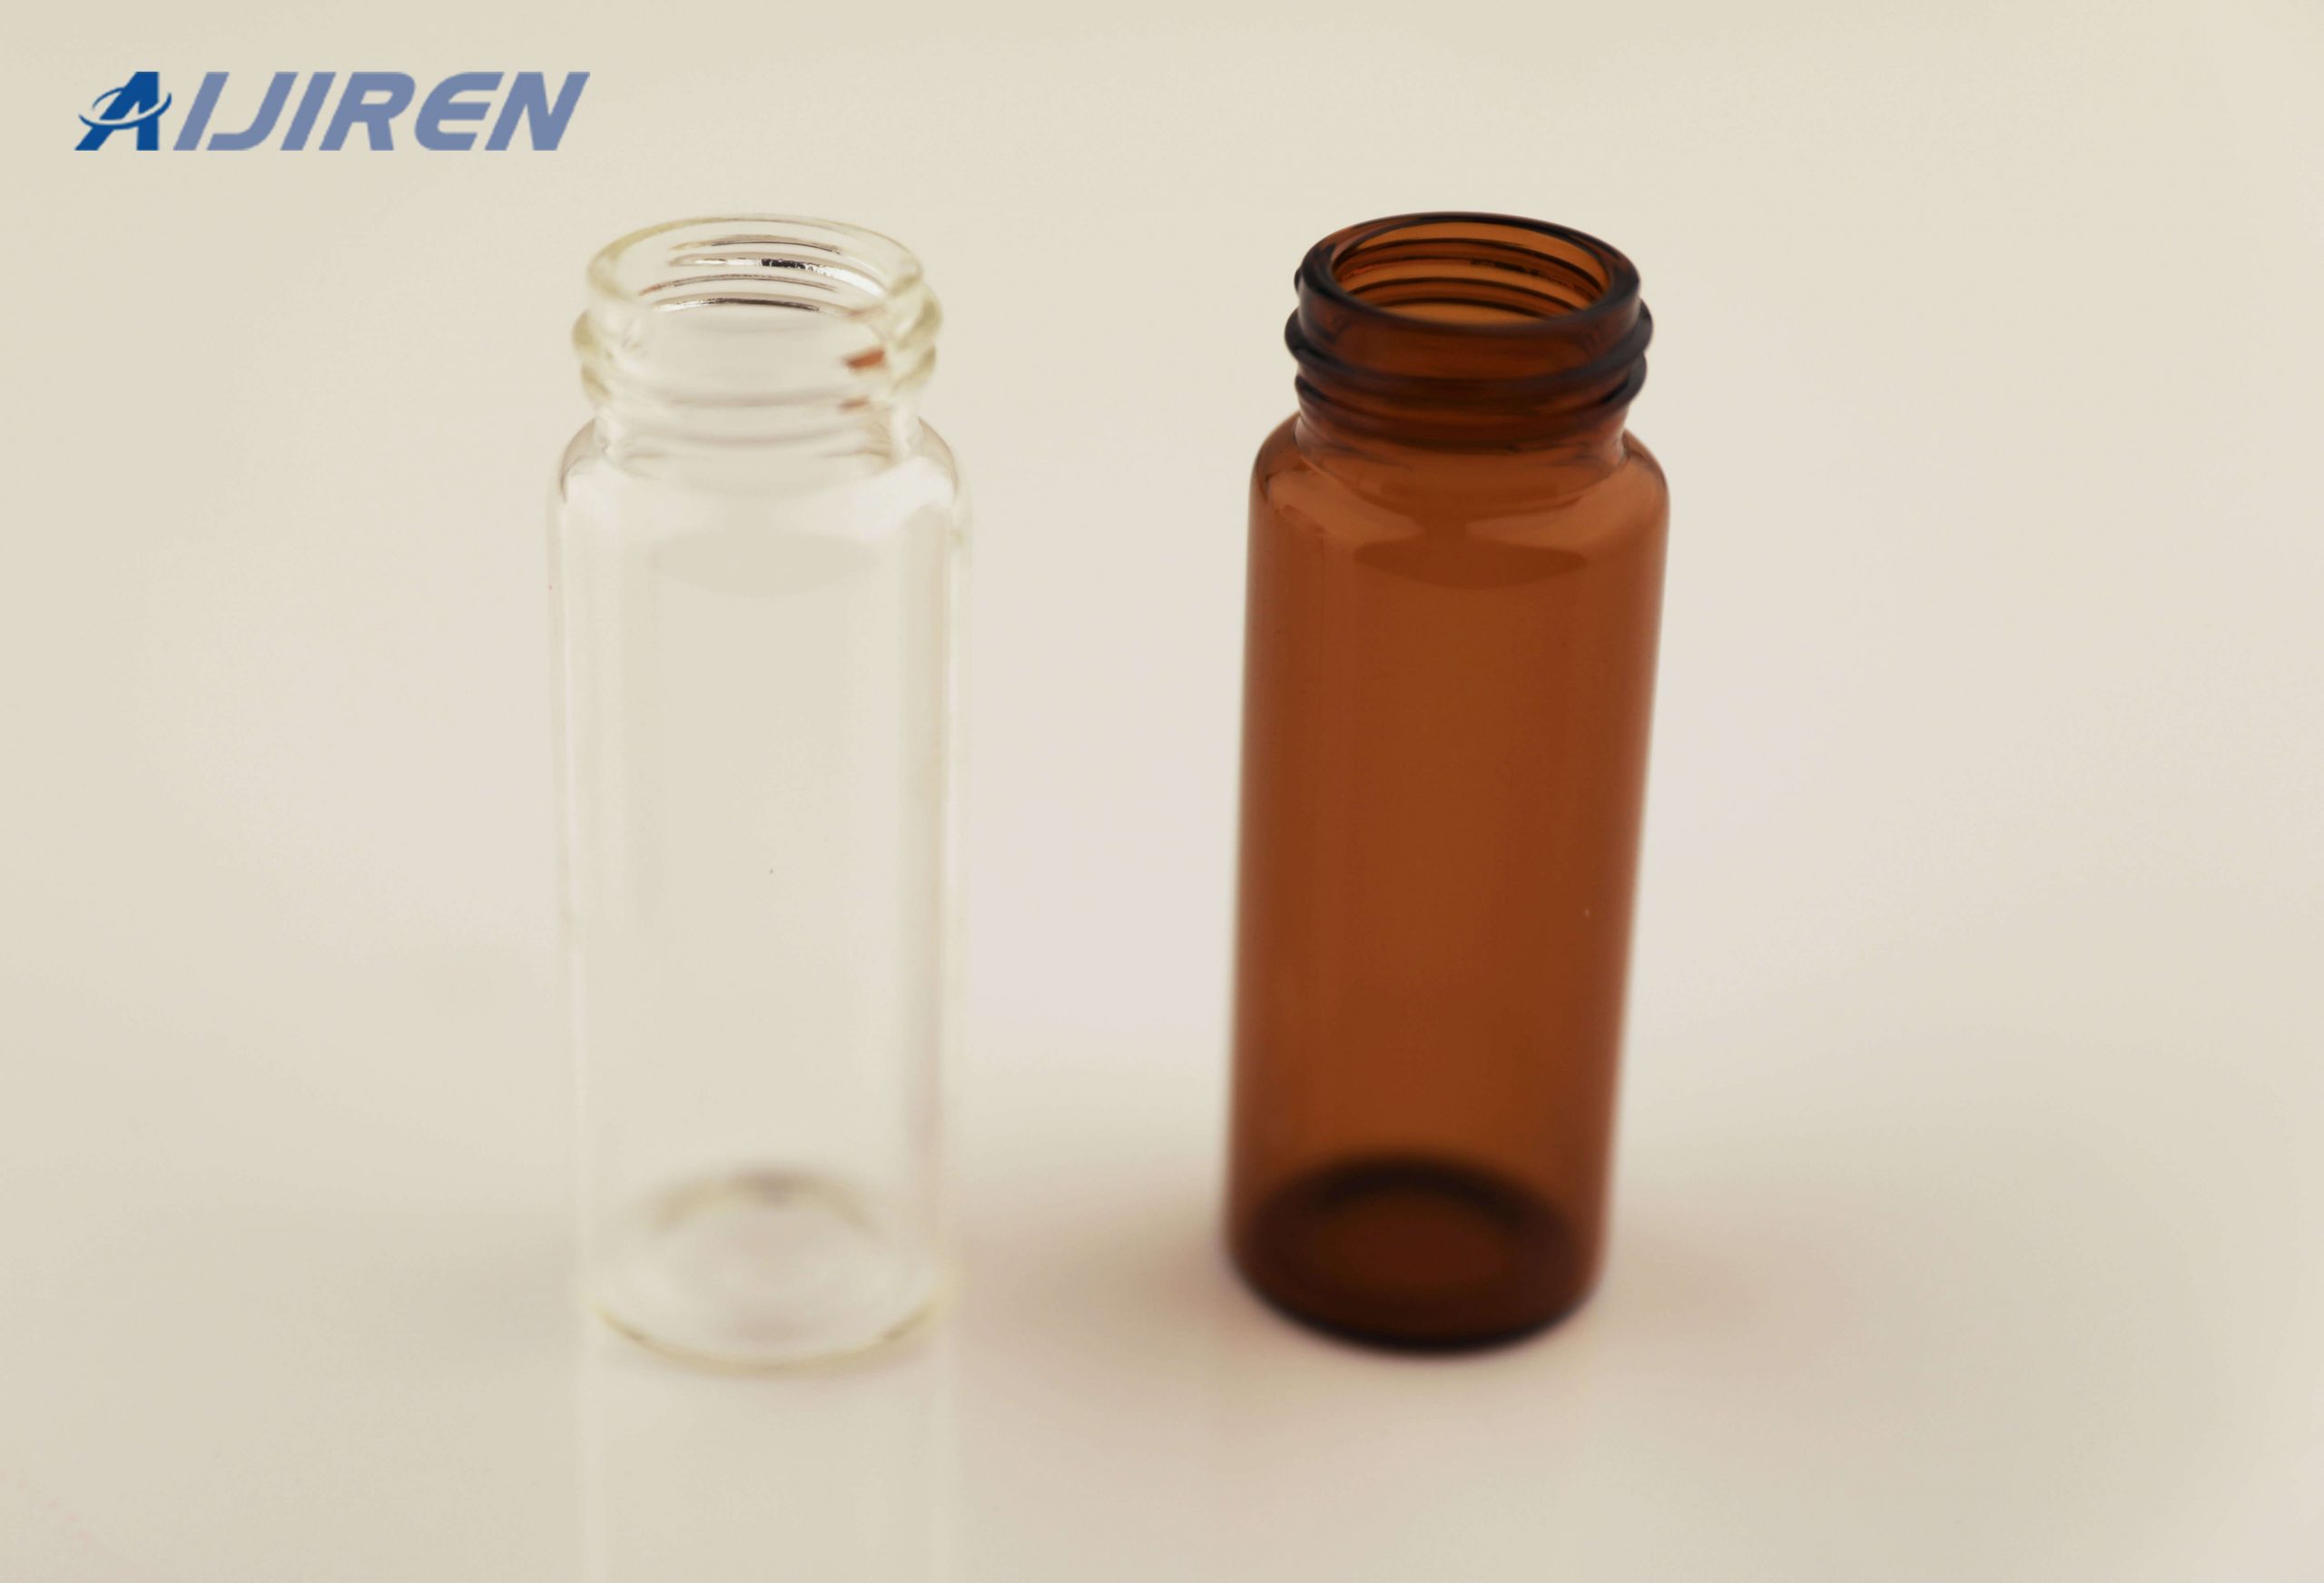 Aijiren provide Sample Storage Vials